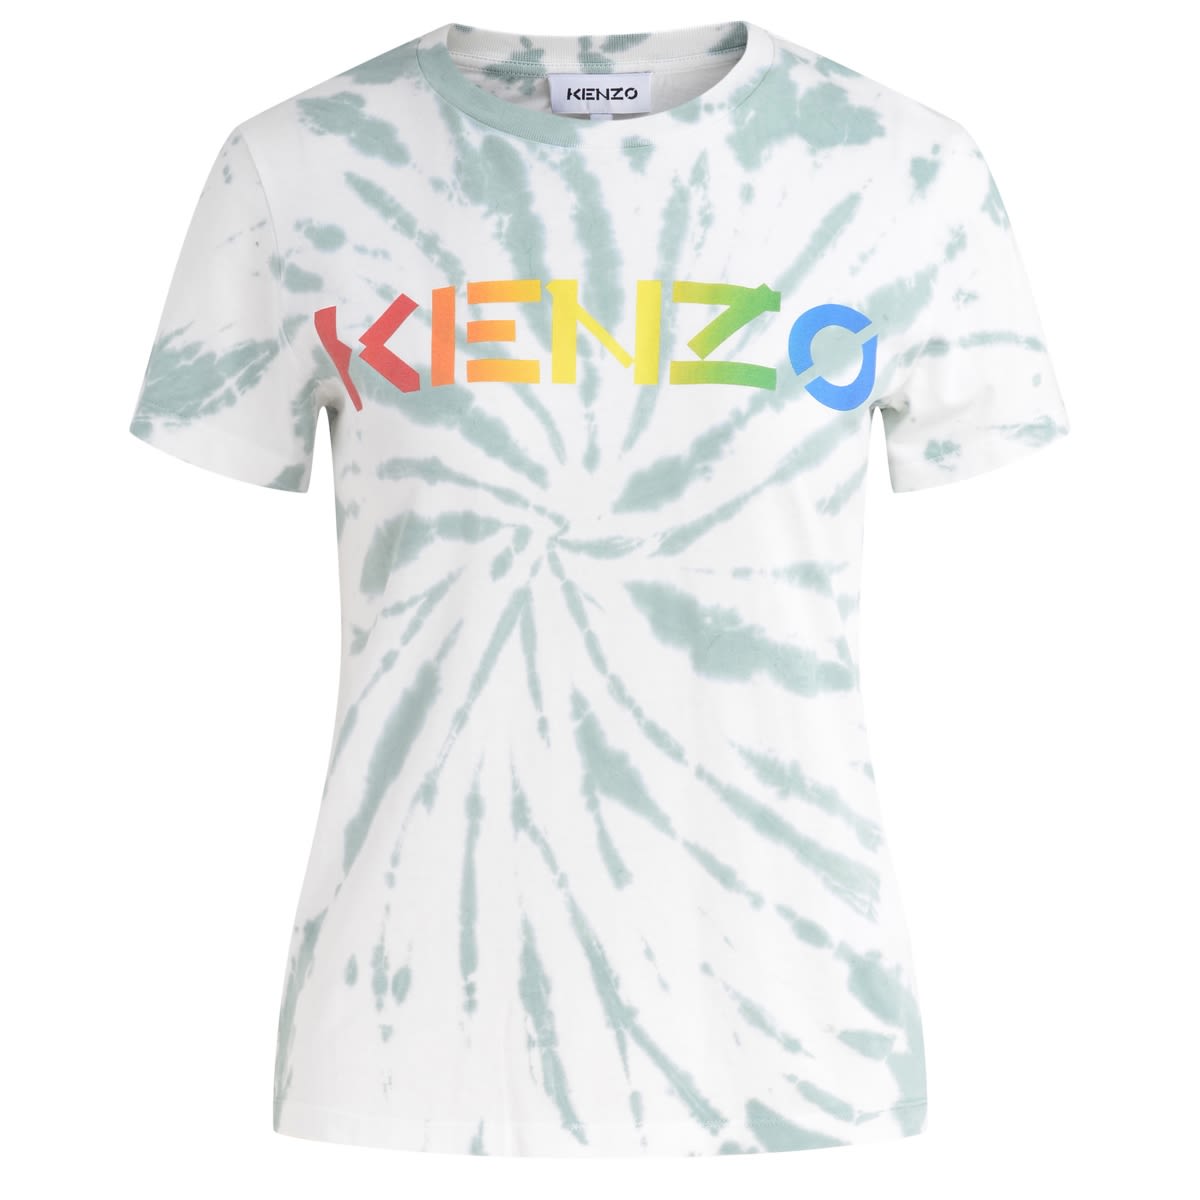 Kenzo Tie-dye Mint Color T-shirt